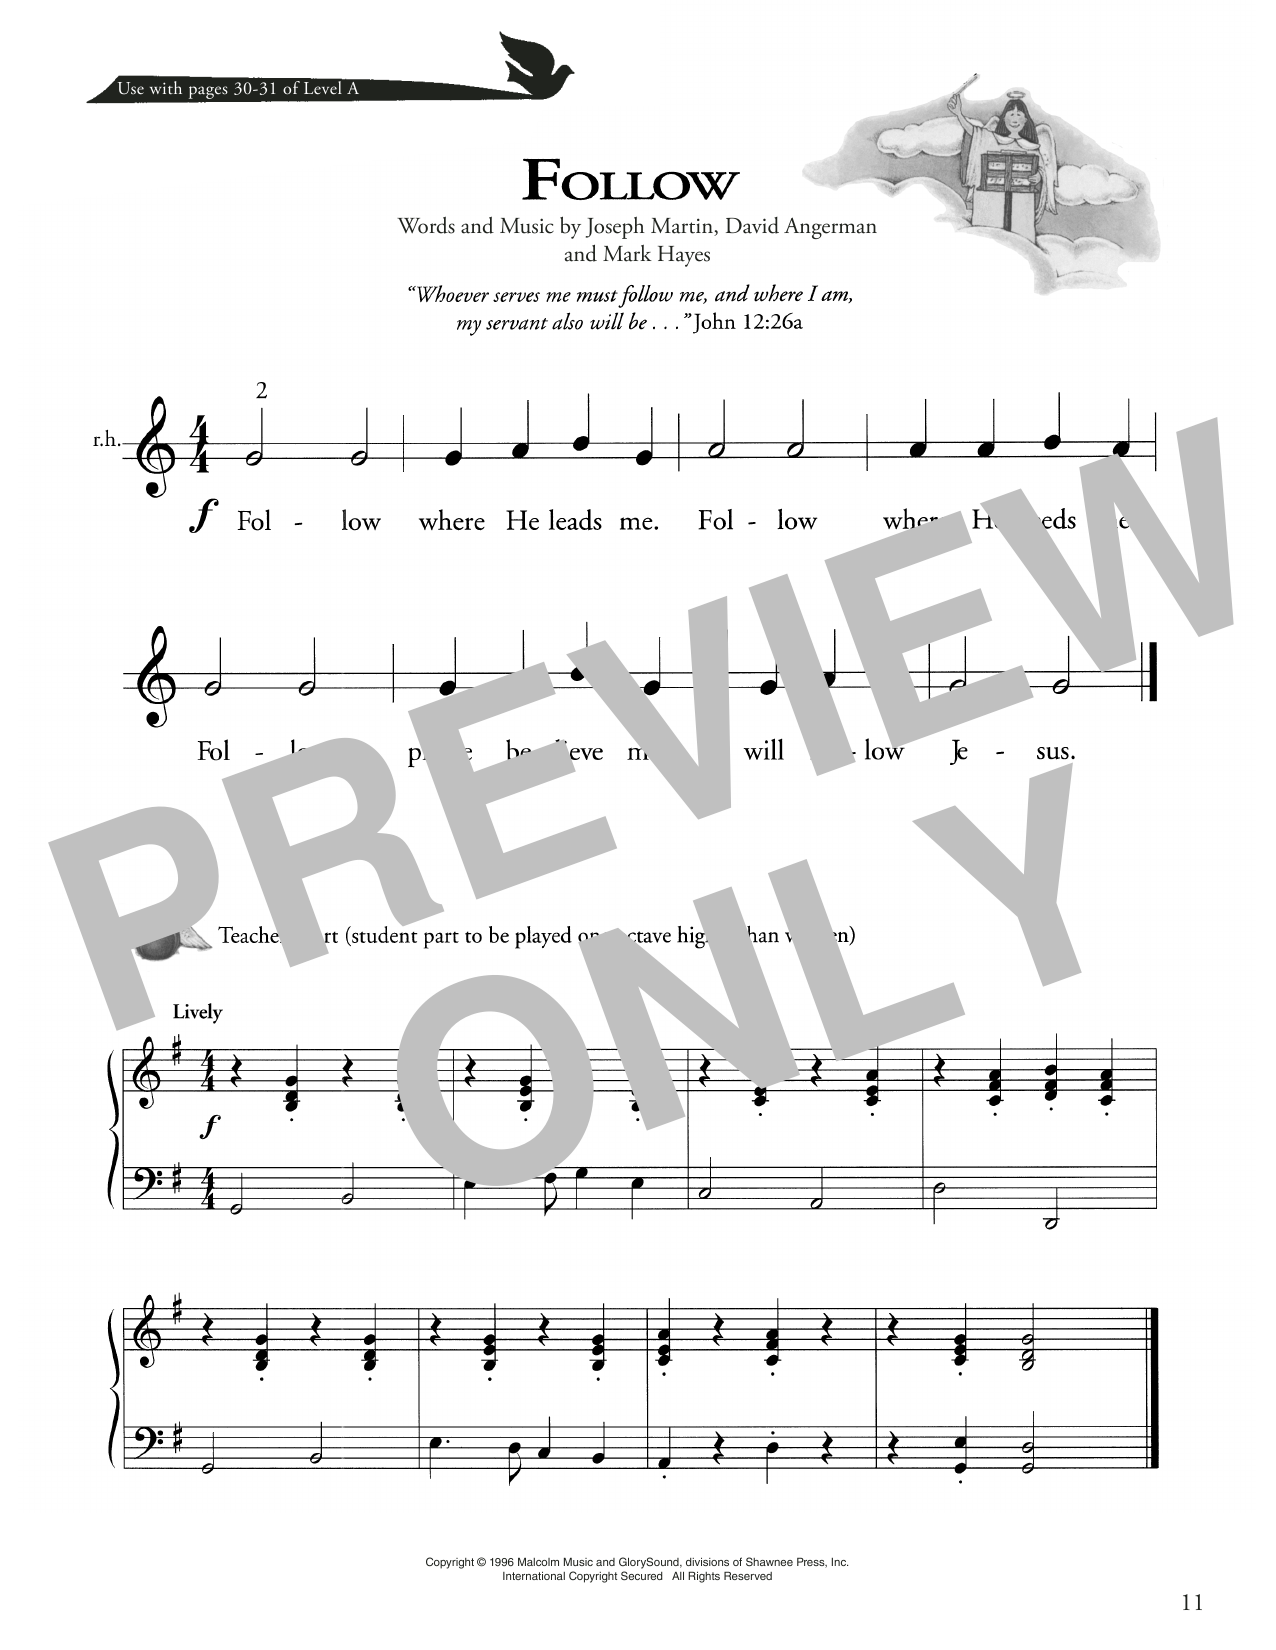 Joseph Martin, David Angerman and Mark Hayes Follow Sheet Music Notes & Chords for Piano Method - Download or Print PDF